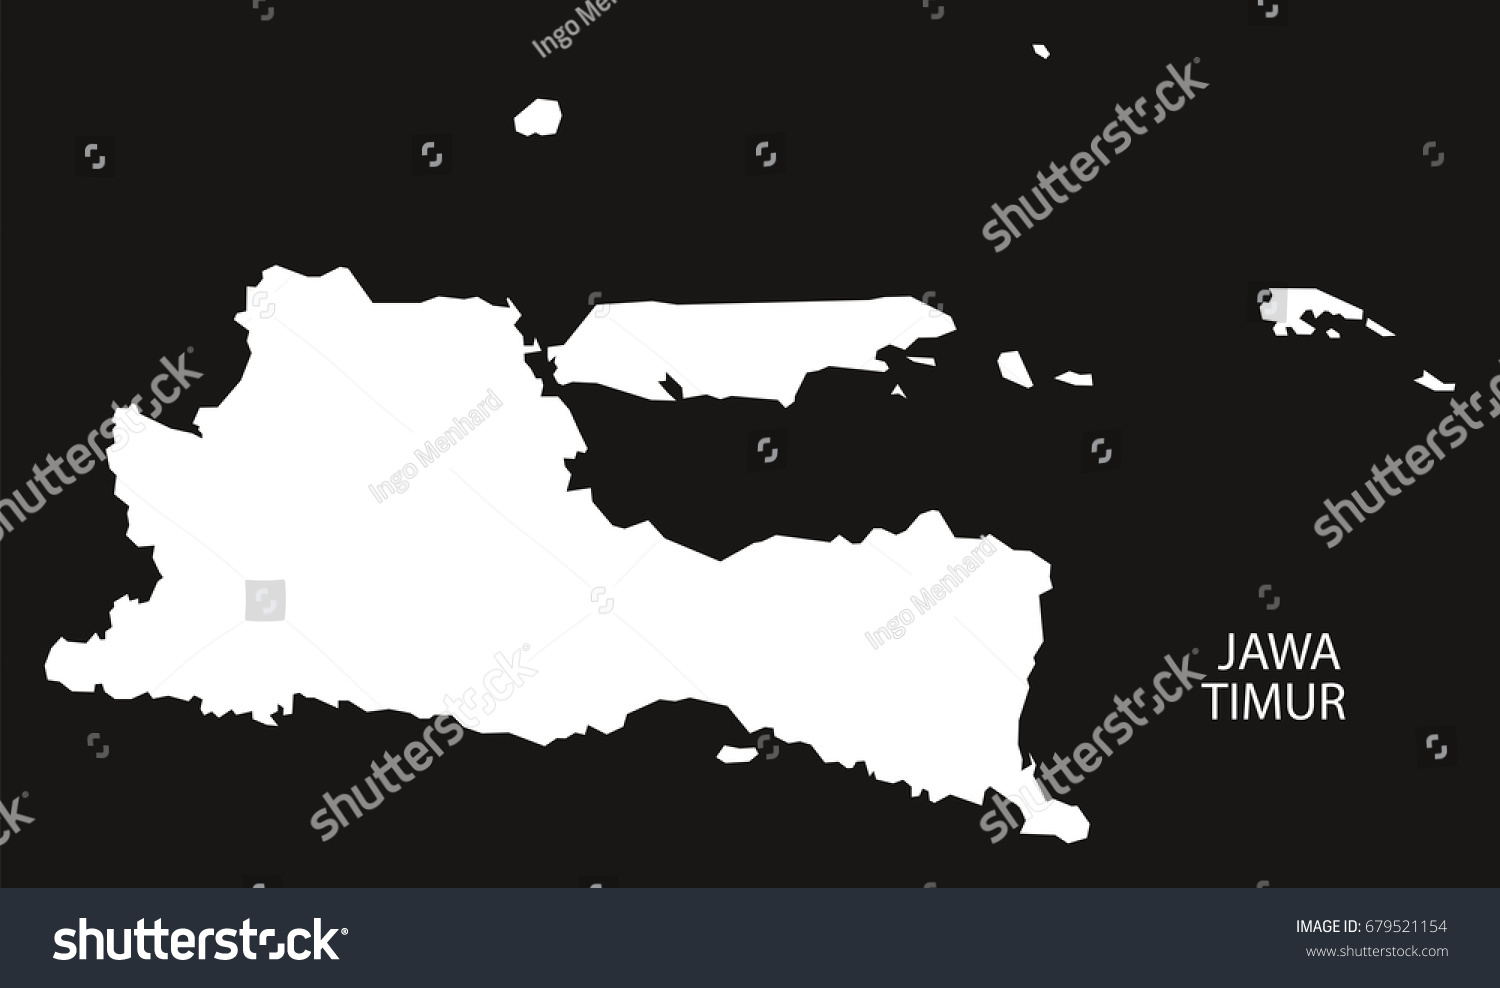 Peta Jawa Timur Vector Jawa Timur Indonesia Map Black Inverted Stock Vector (Royalty Free)  679521154 | Shutterstock